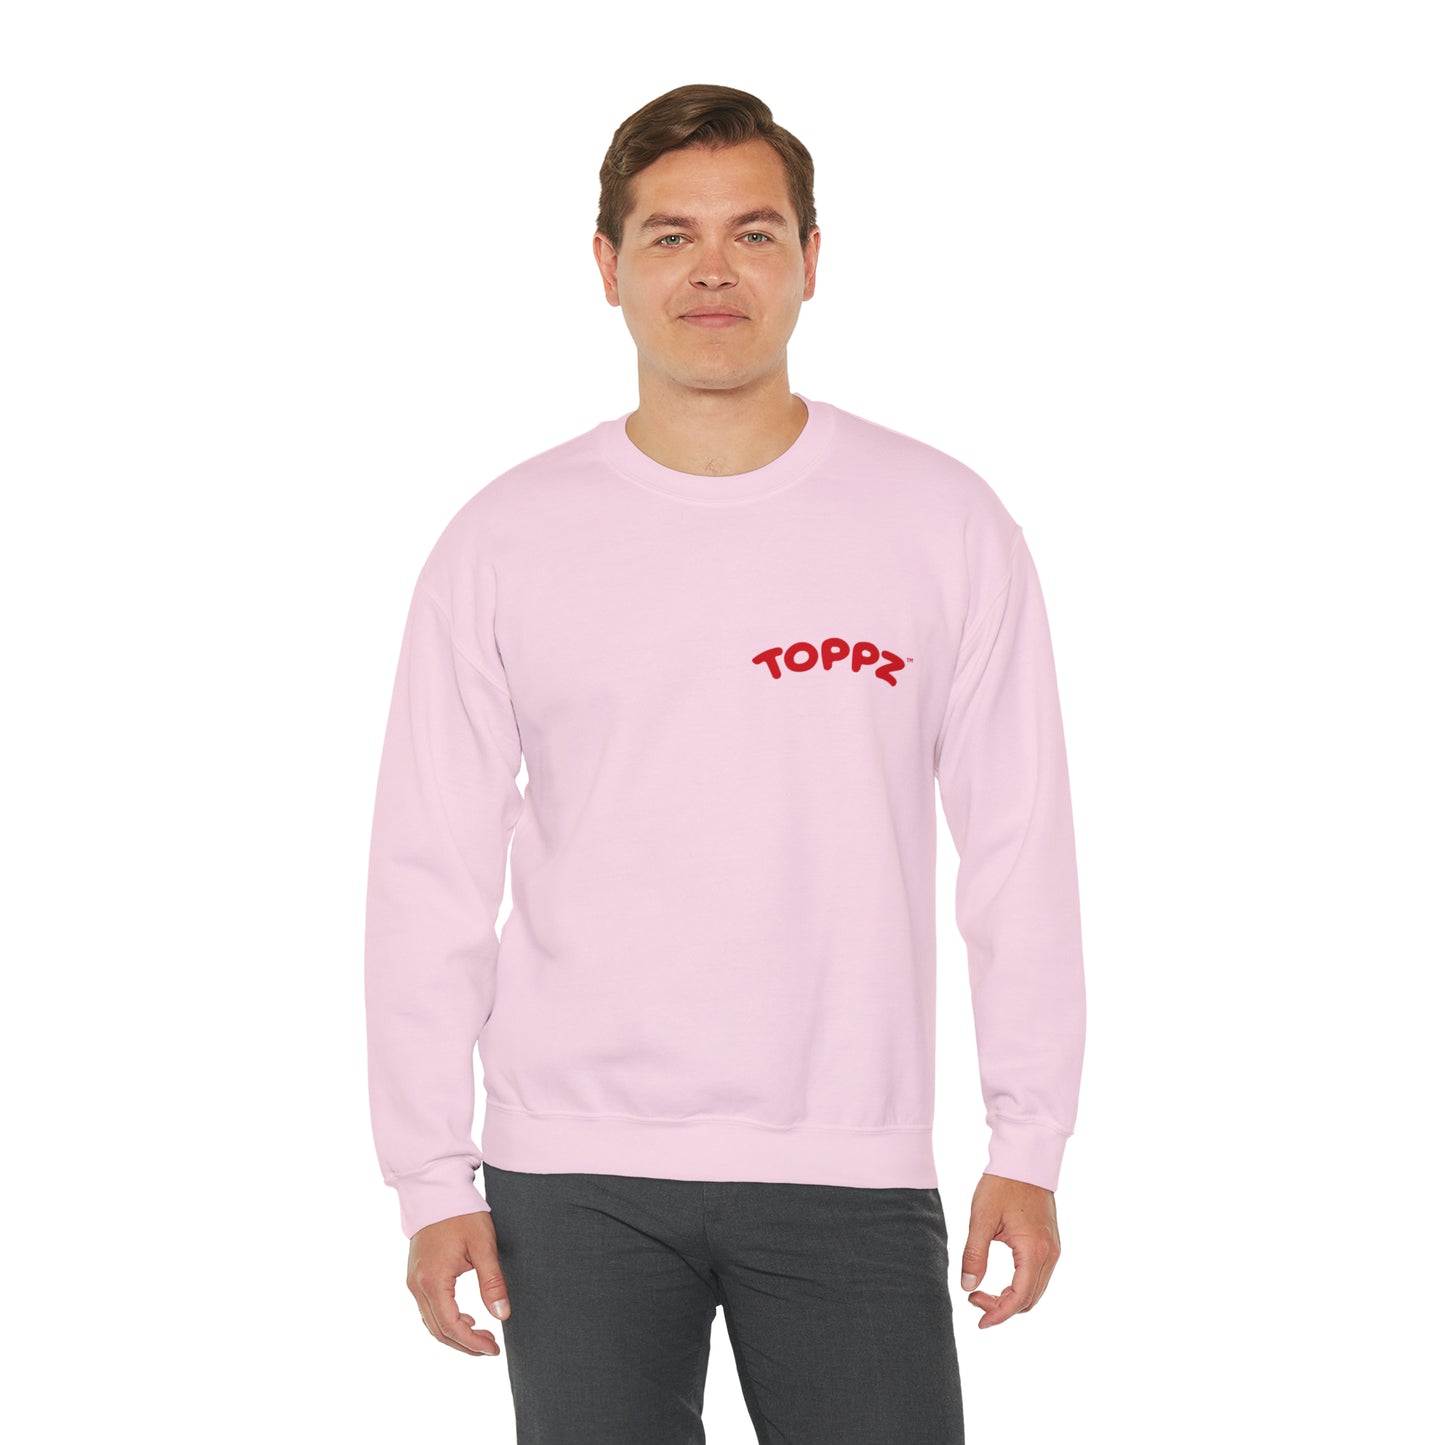 Toppz Unisex Crewneck Sweatshirt